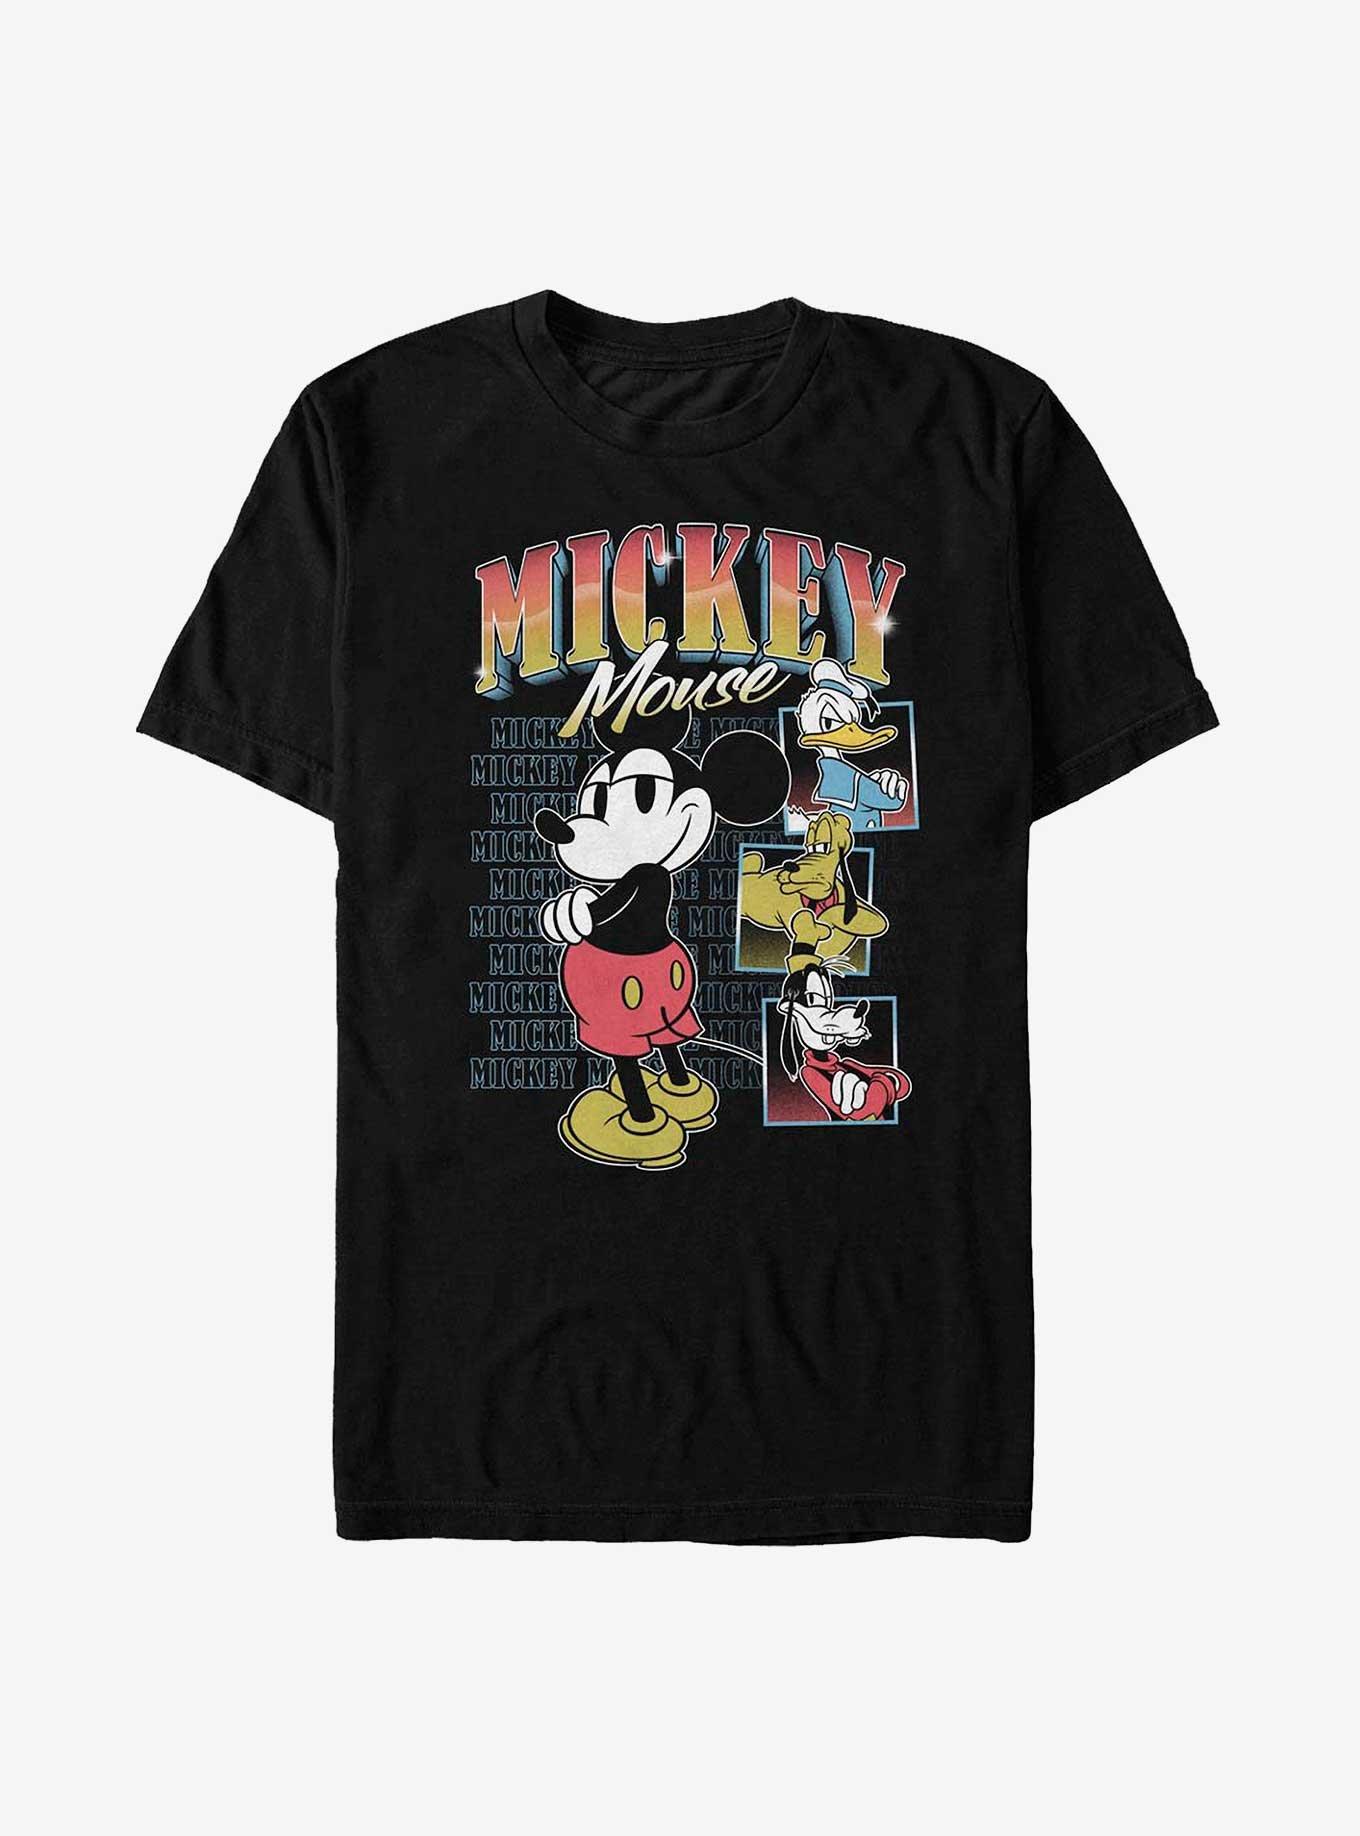 Vtg 70s Mickey Mouse T-shirt Heather Gray M/L Sportswear Tag Walt